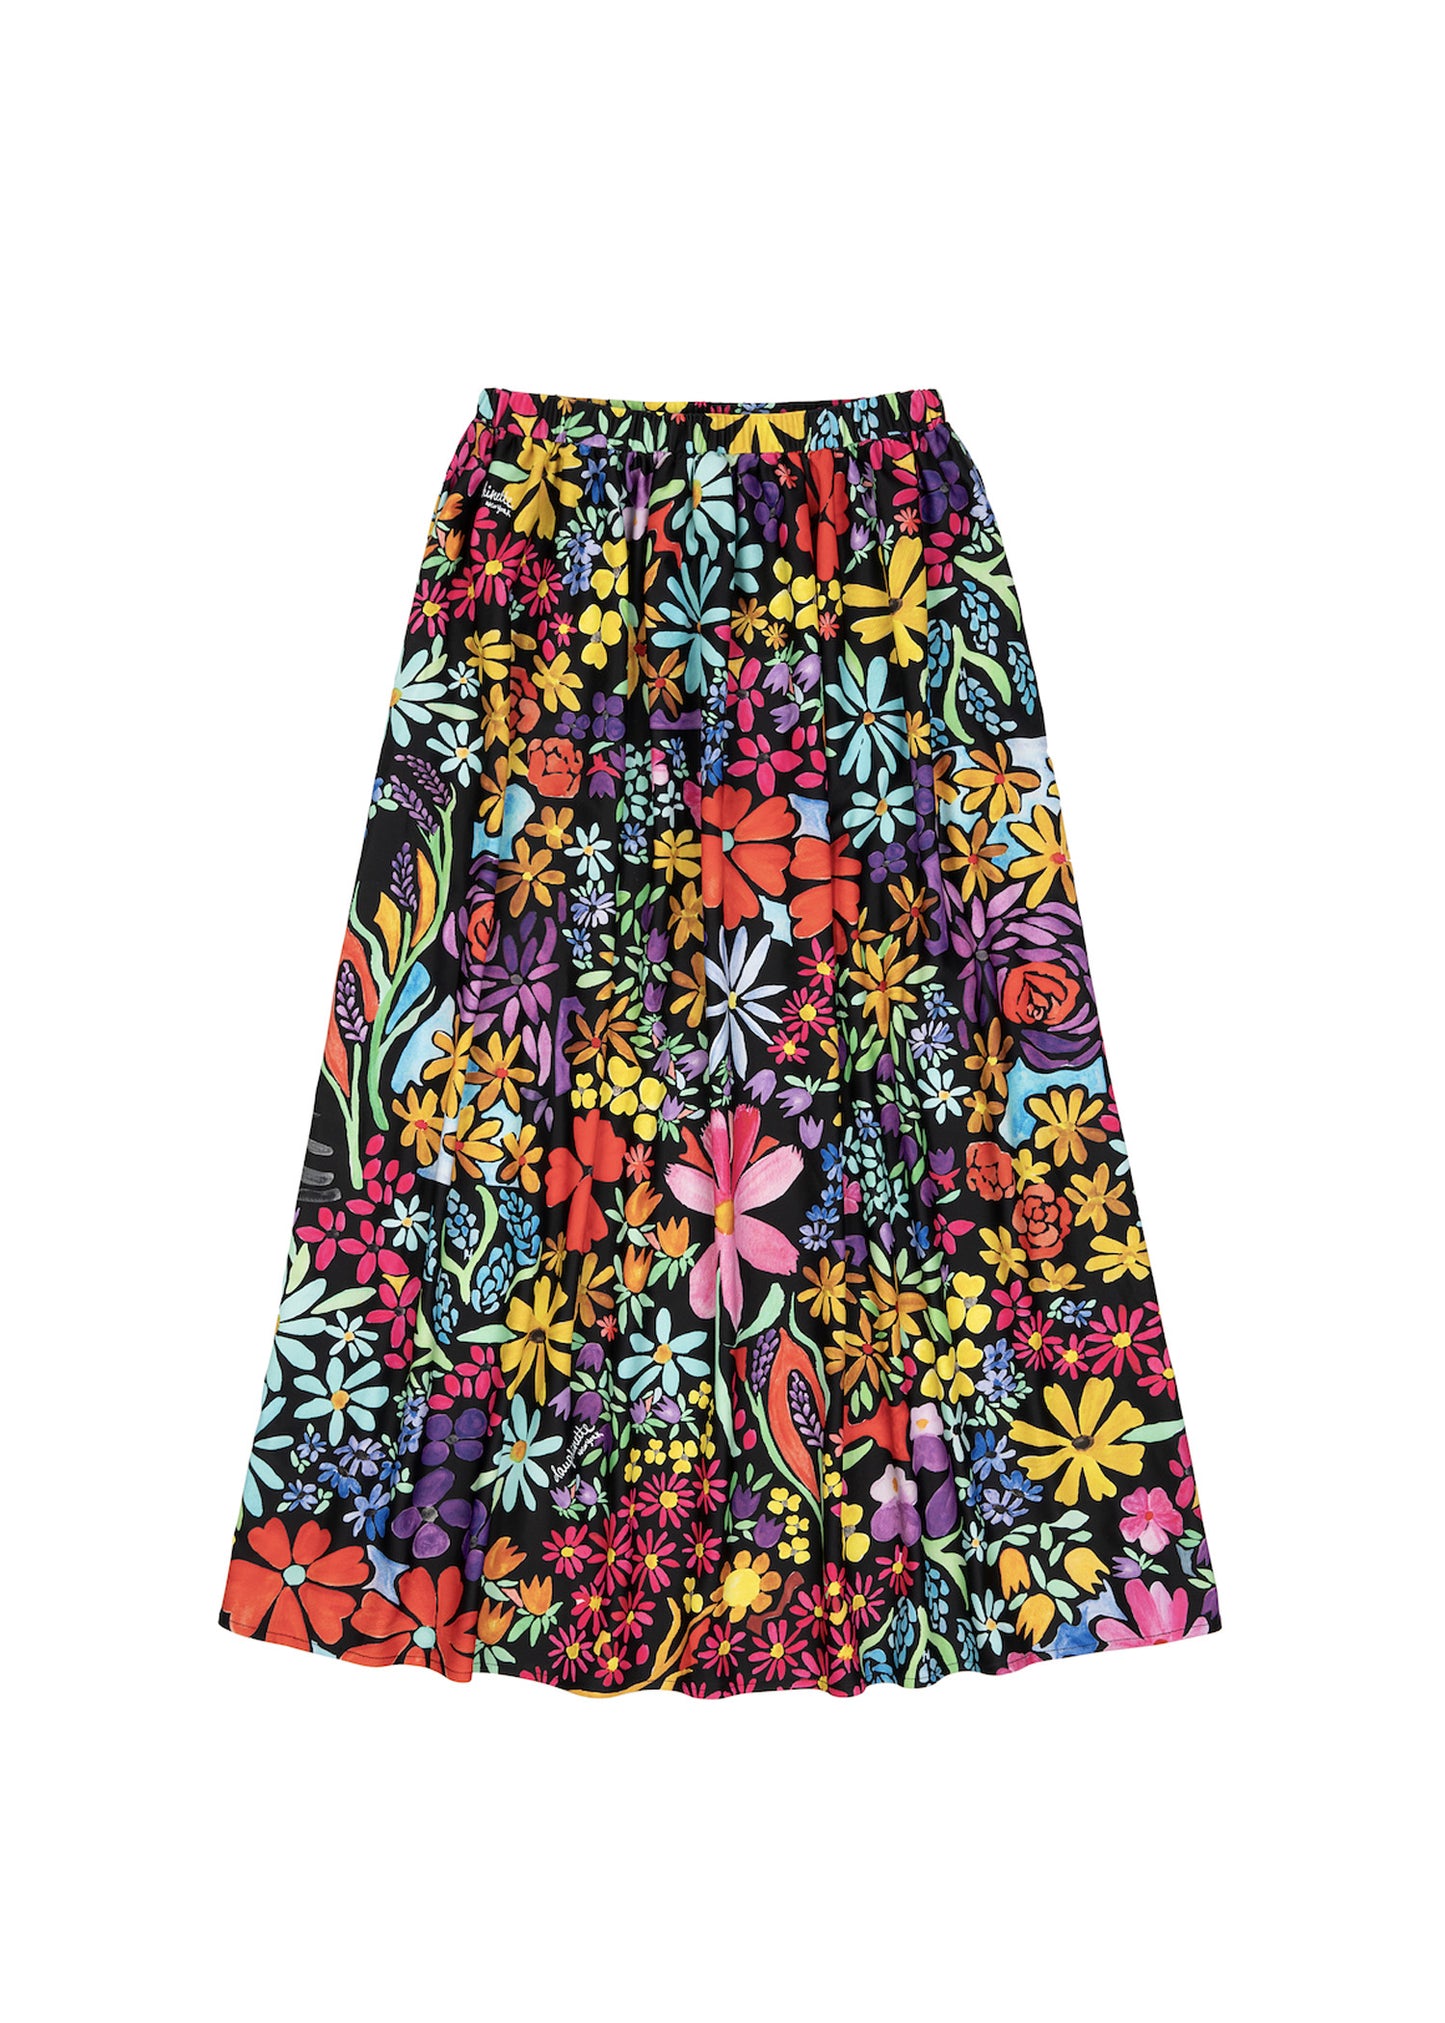 Midi length pull on skirt in our Wonderland Flora print on a black base, hand-illustrated by designer Olivia Cheng.